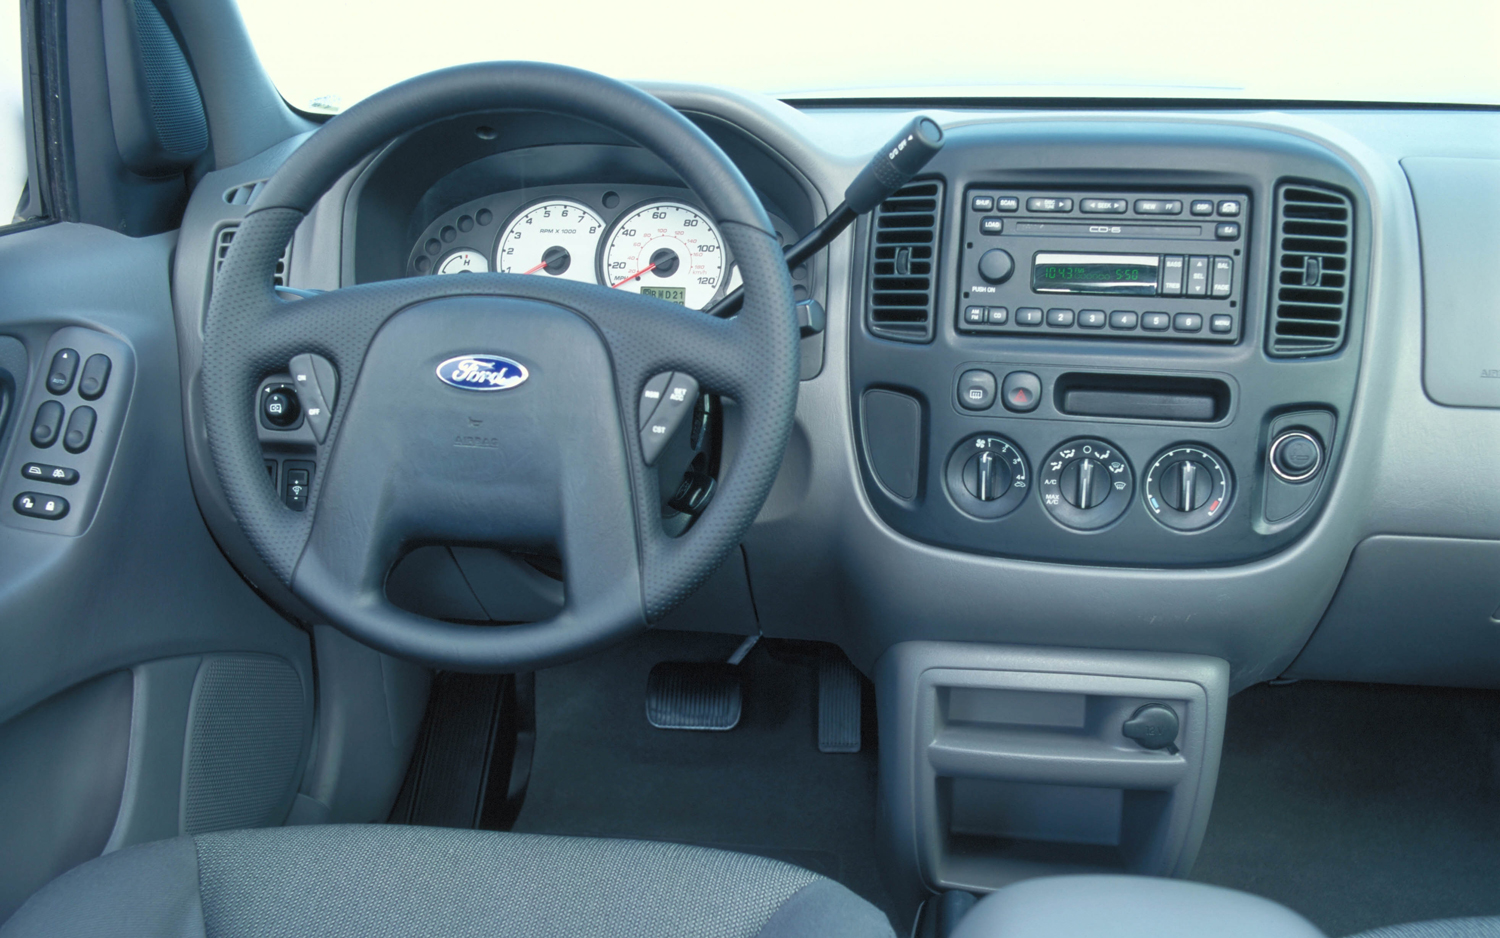 2018 Ford Freestar interior